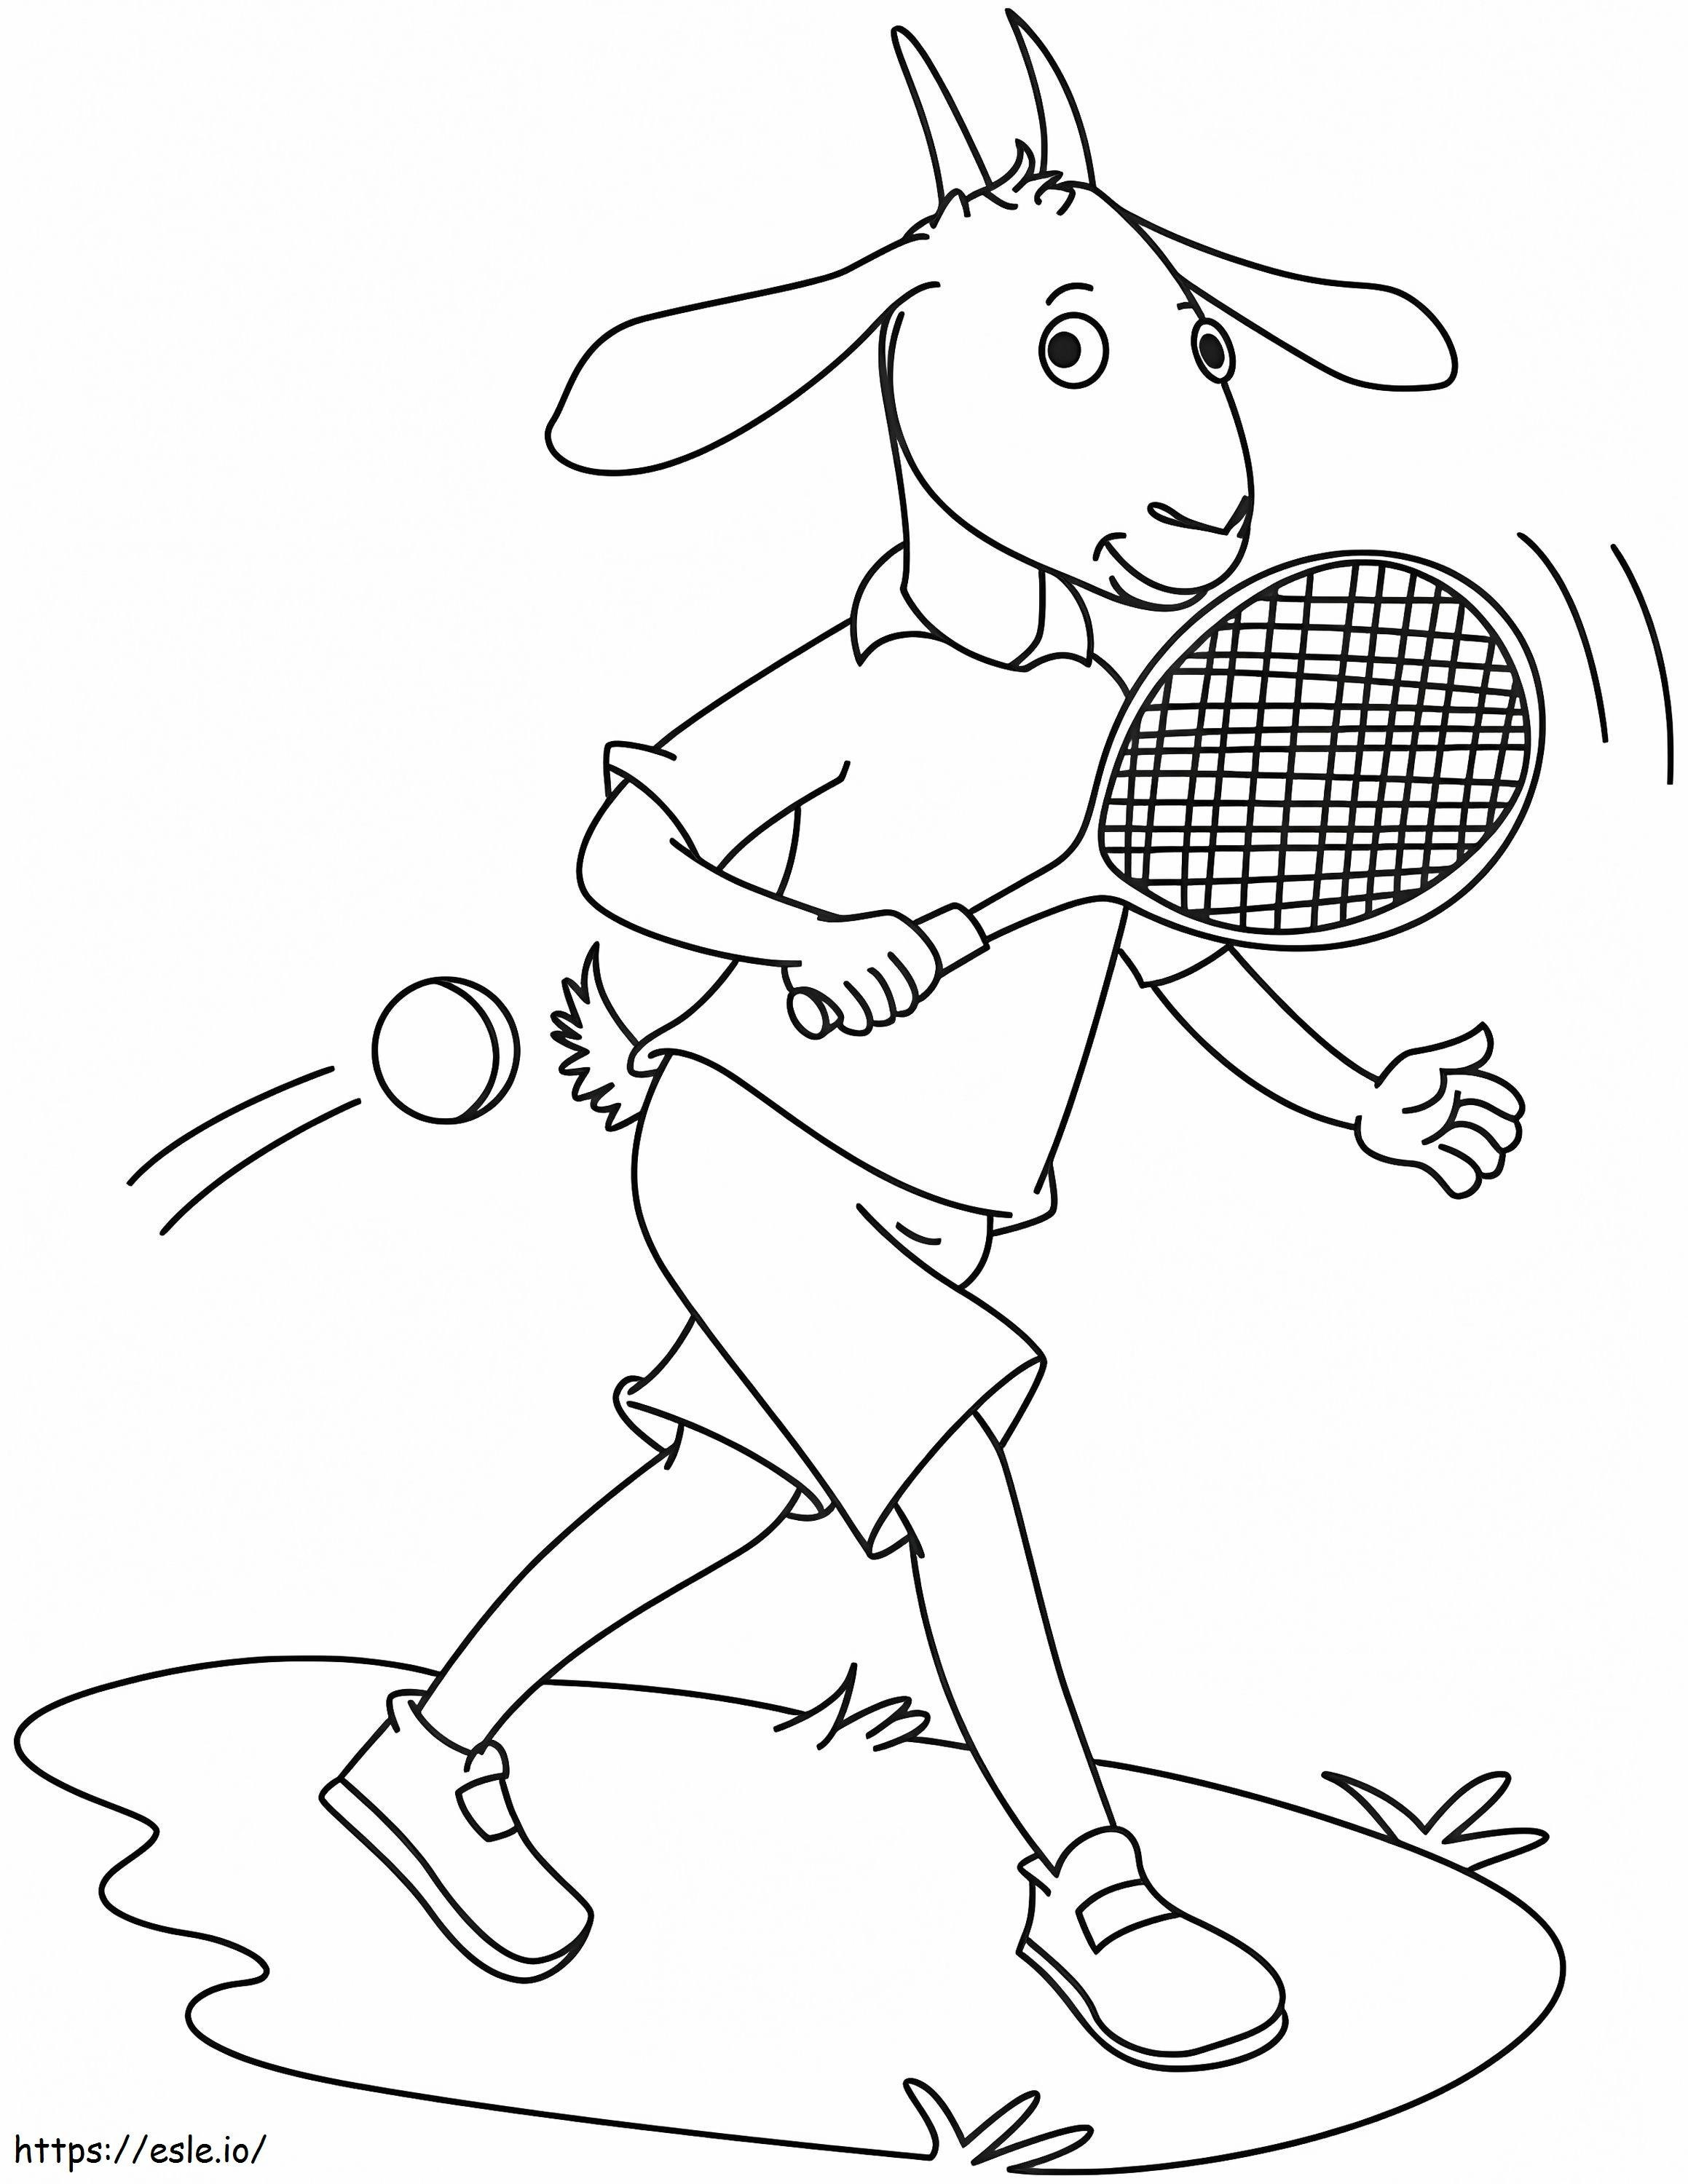 1542094131 Koza gra w tenisa kolorowanka